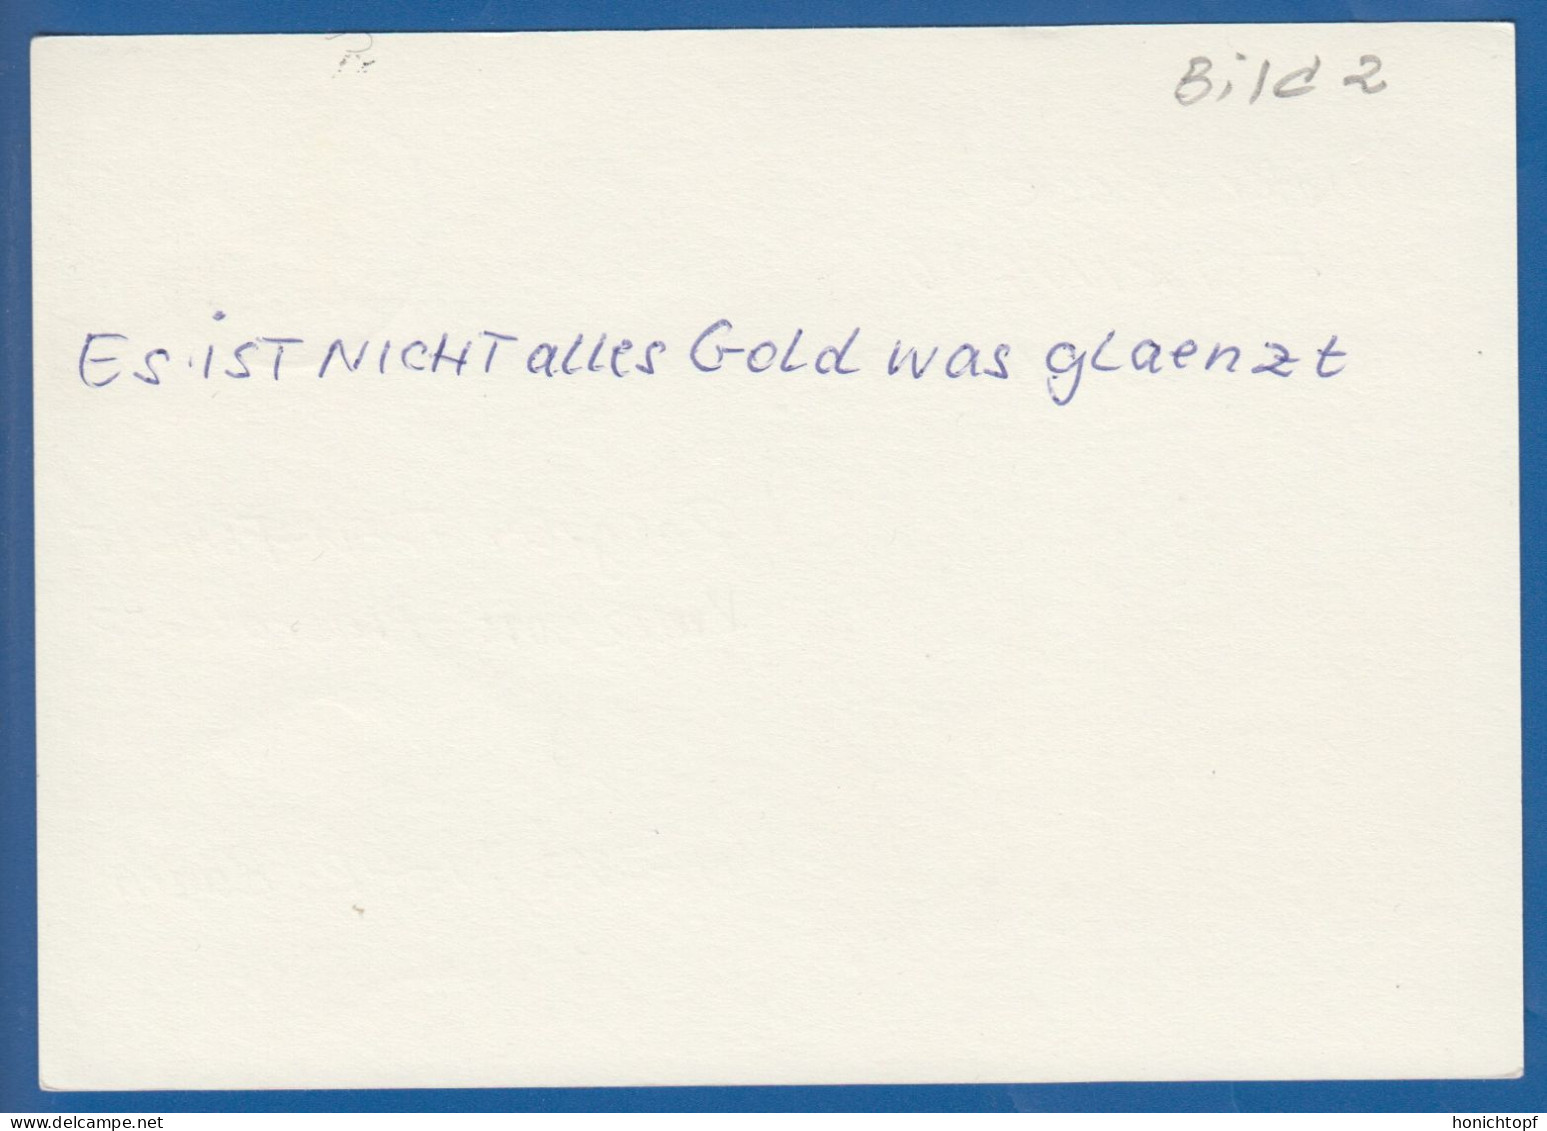 Deutschland; BRD; Postkarte; 60 Pf Bavaria München; Aschaffenburg Am Main, Schloss Johannisburg; Bild2 - Geïllustreerde Postkaarten - Gebruikt